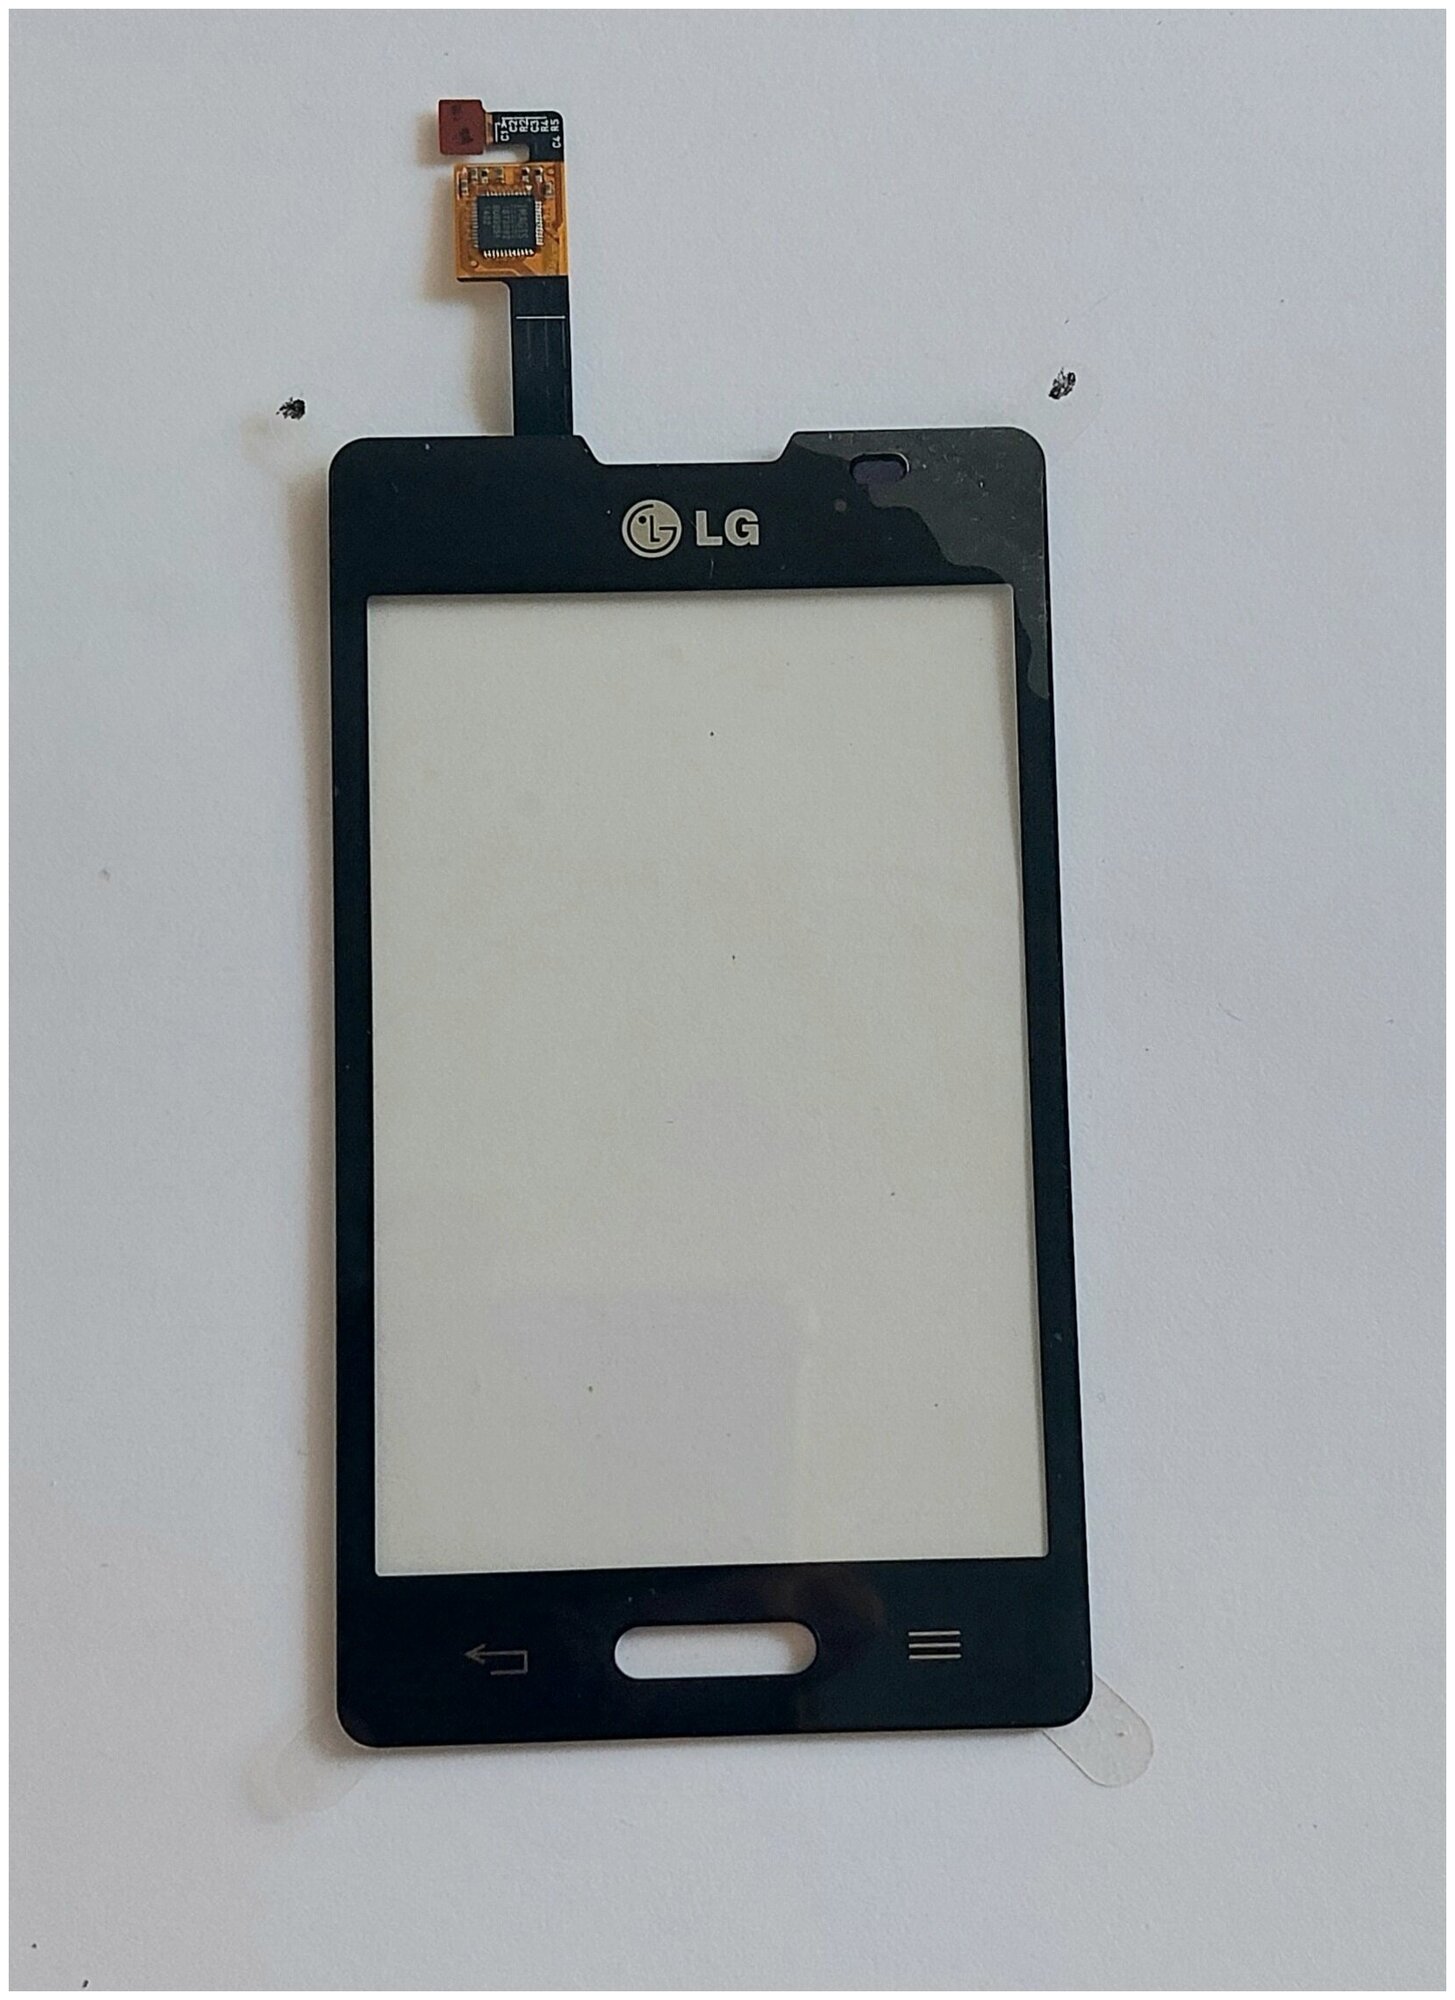 Тачскрин для LG E440 Optimus L4 II Dual (черный)